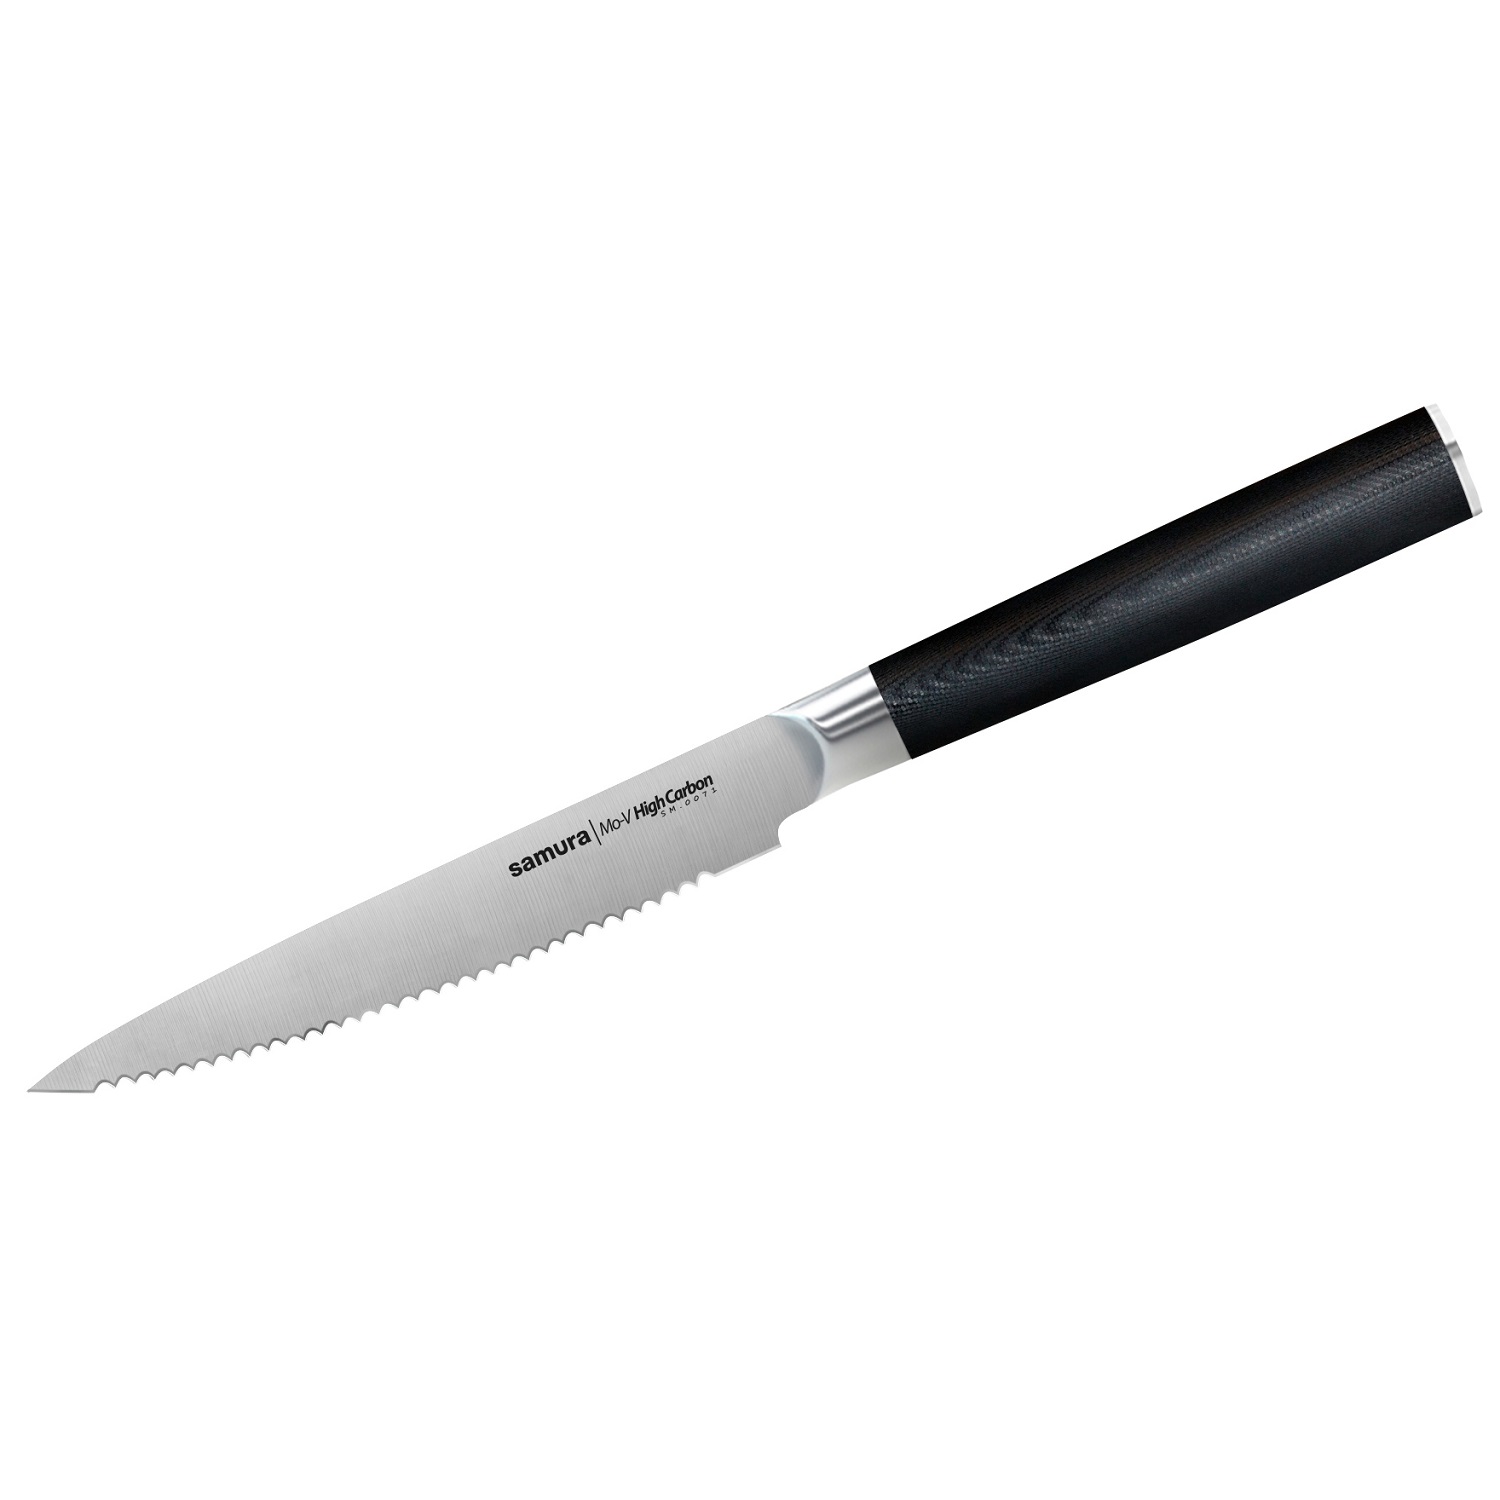 Нож Samura для томатов Mo-V, 12 см, G-10 нож для нарезки mo v 23 см sm 0045 k samura